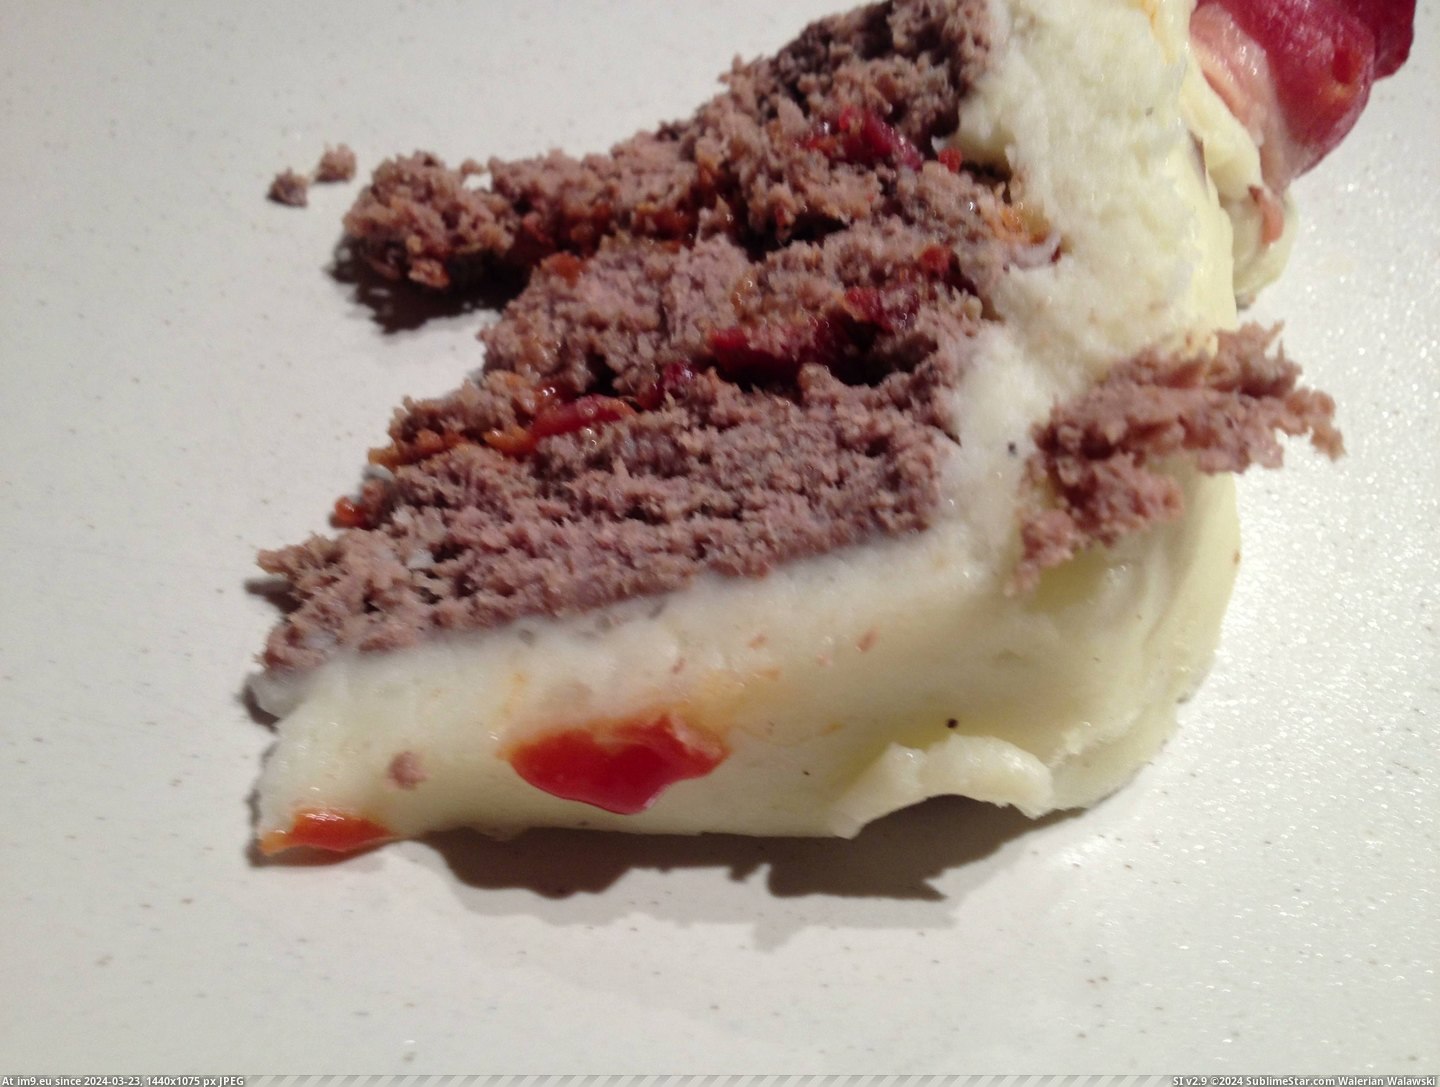  #Meatcake  [Pics] Meatcake 2 Pic. (Image of album My r/PICS favs))